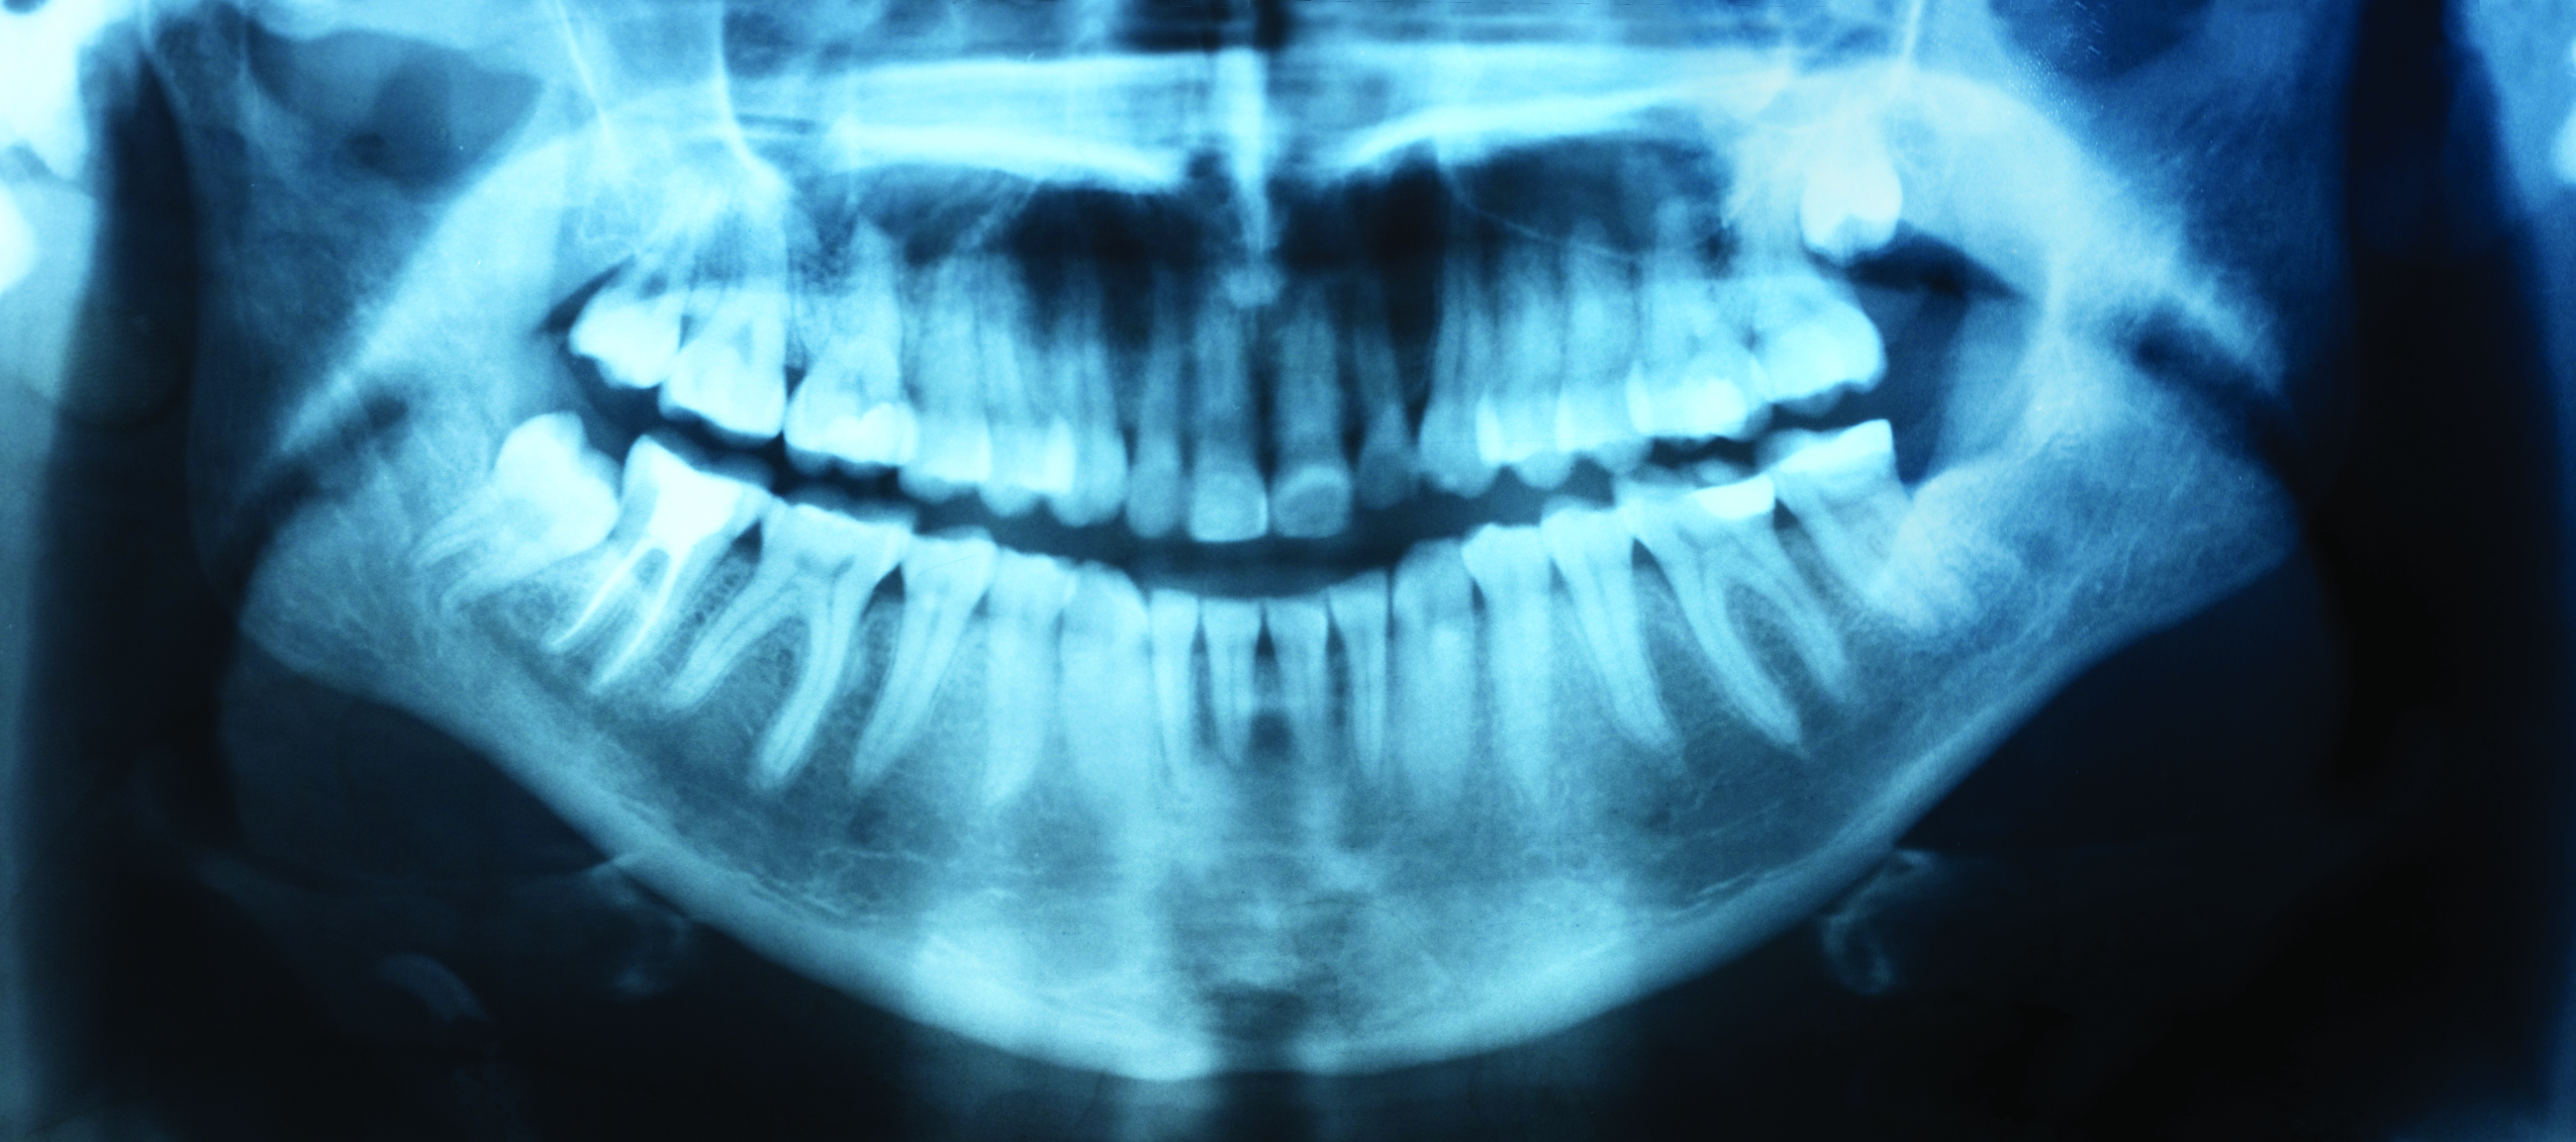 Dental-X-rays